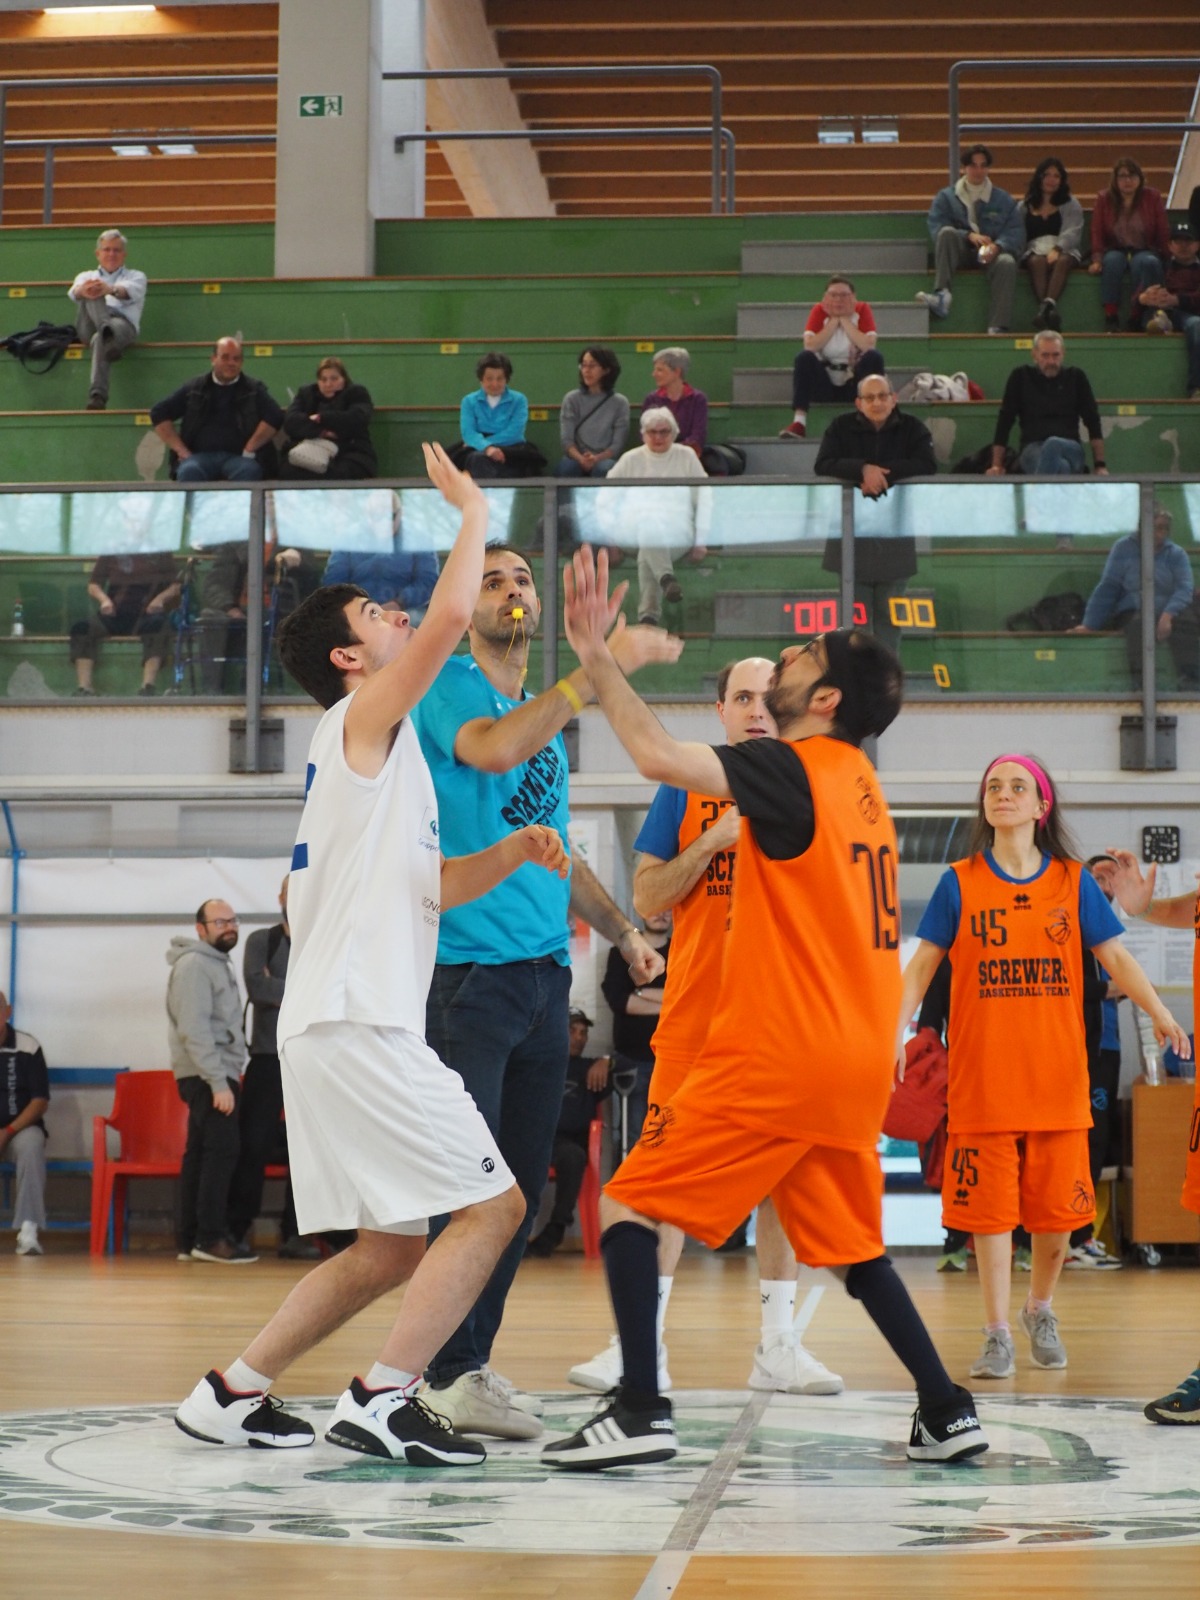 Basket Dir torneo Arcore